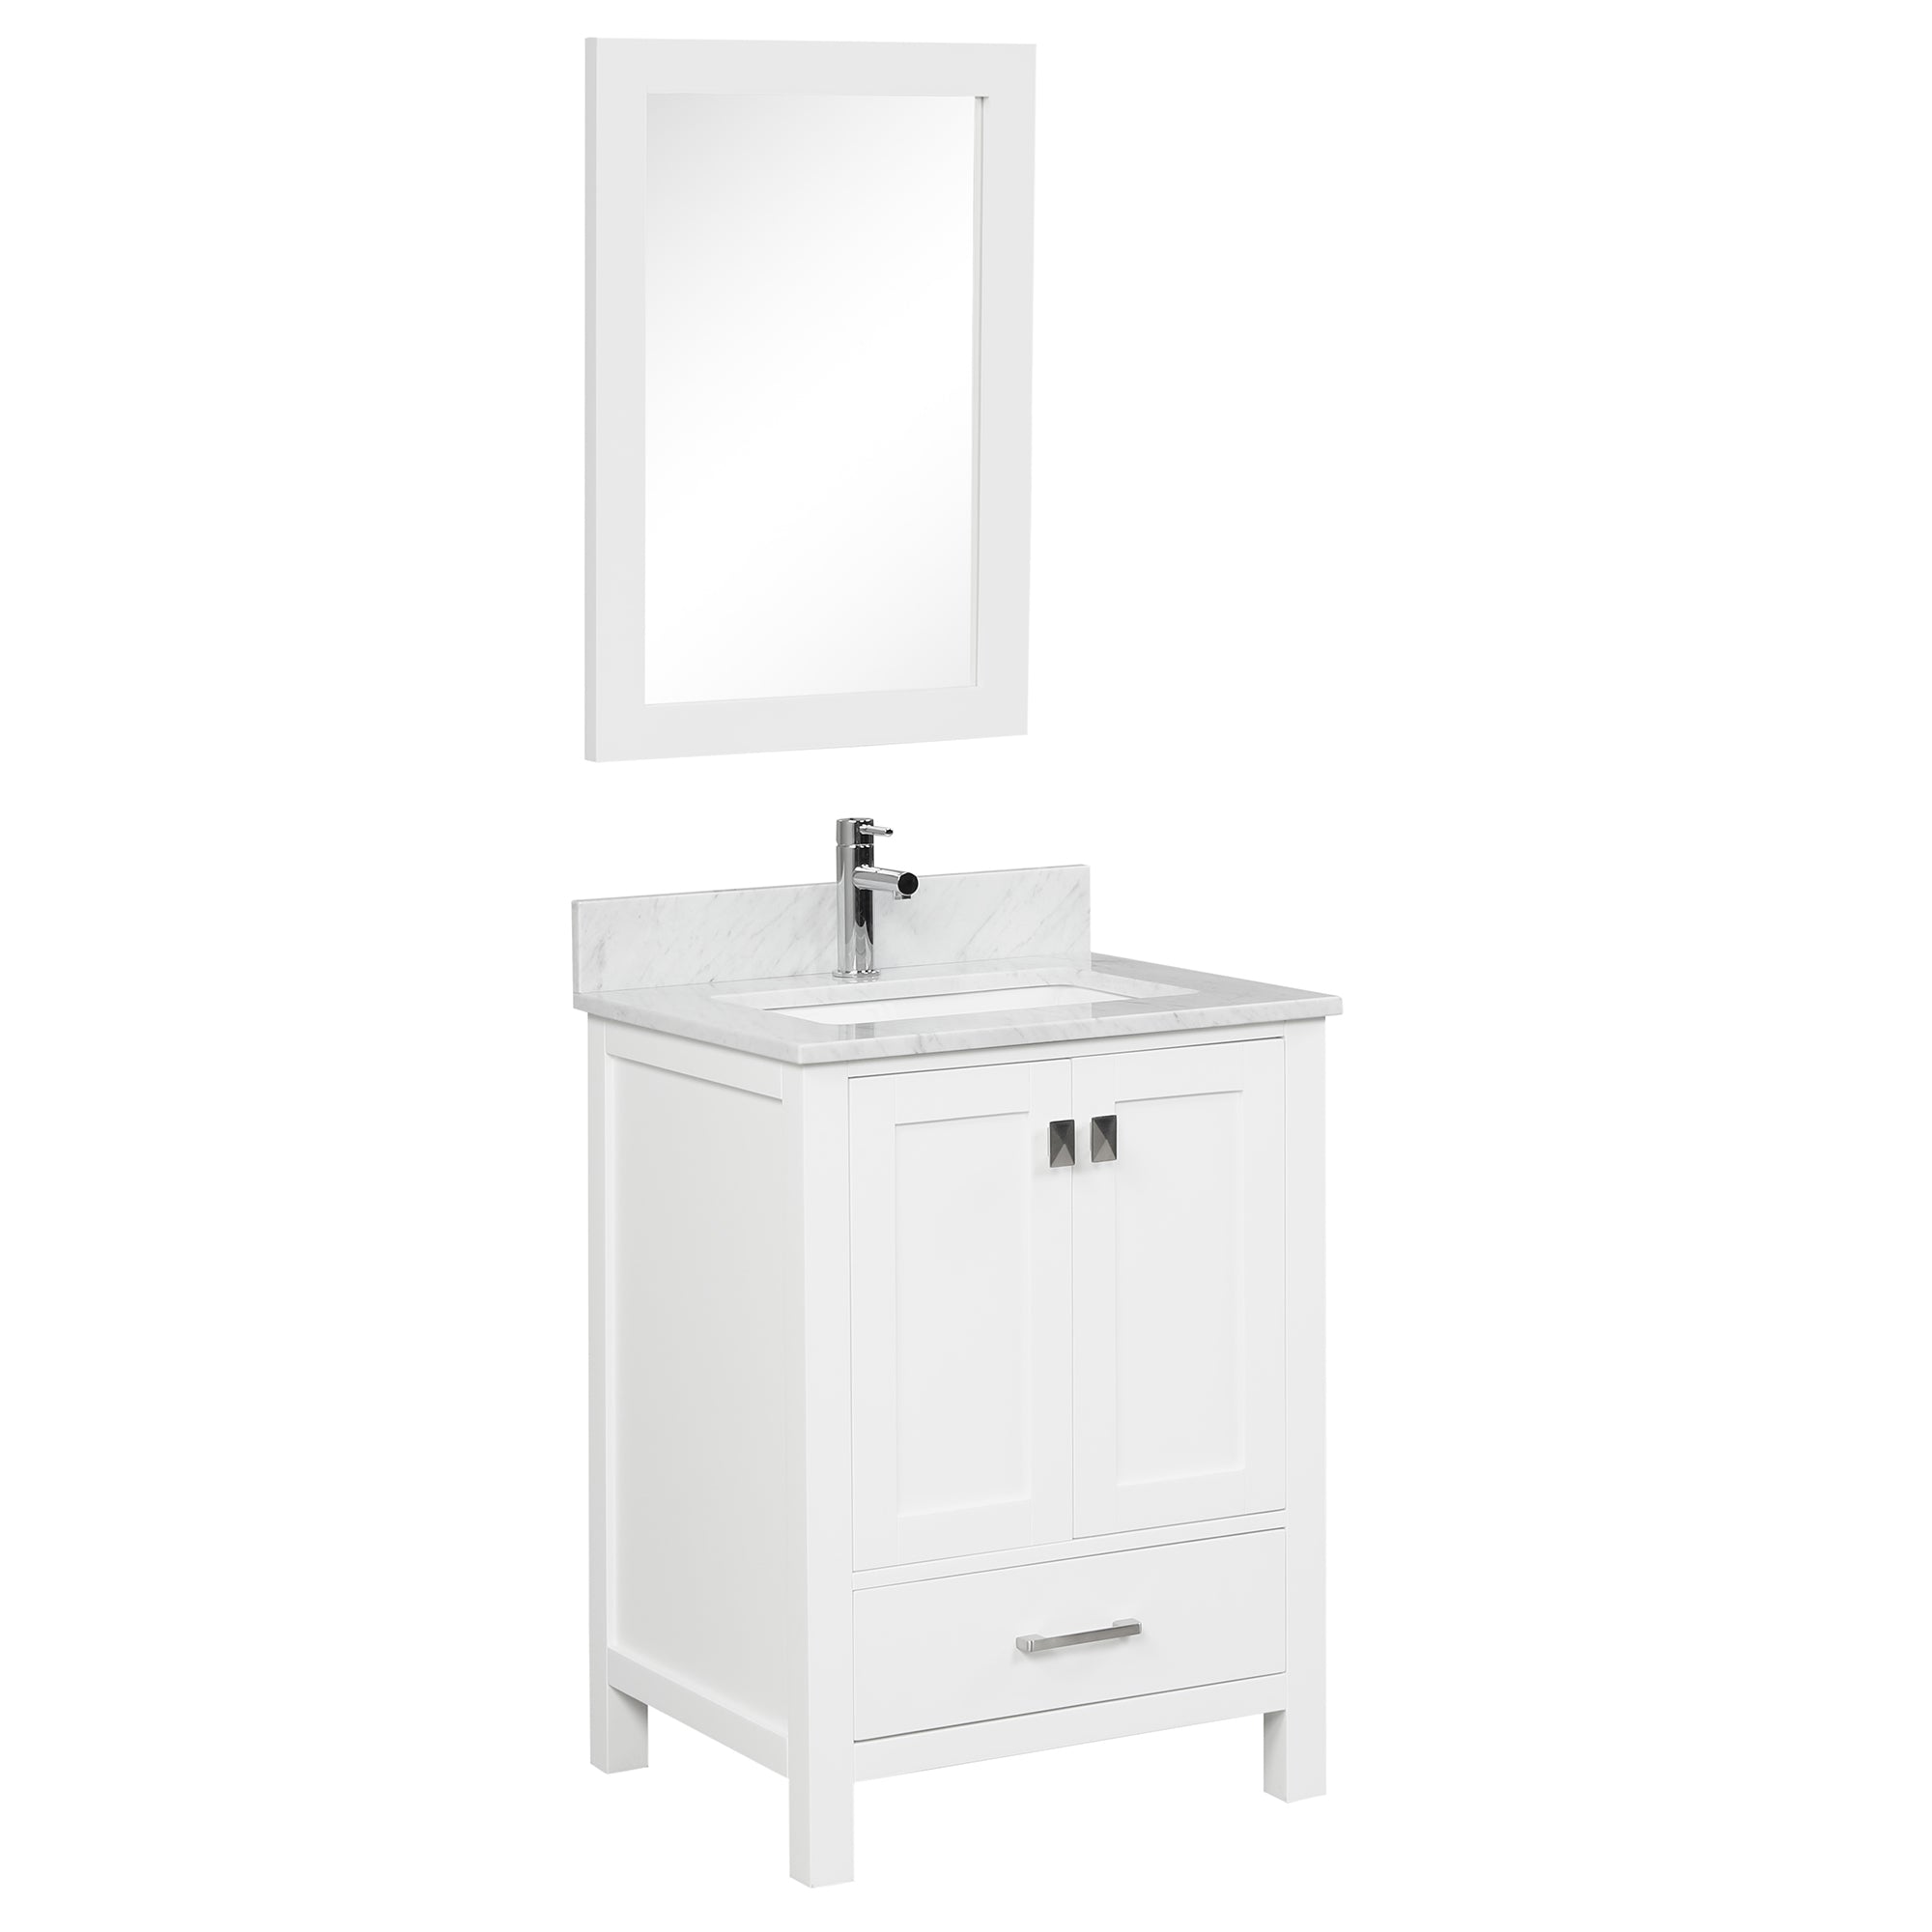 Geneva 24" White Bathroom Vanity with Marble Countertop - Contemporary Bathroom Vanity